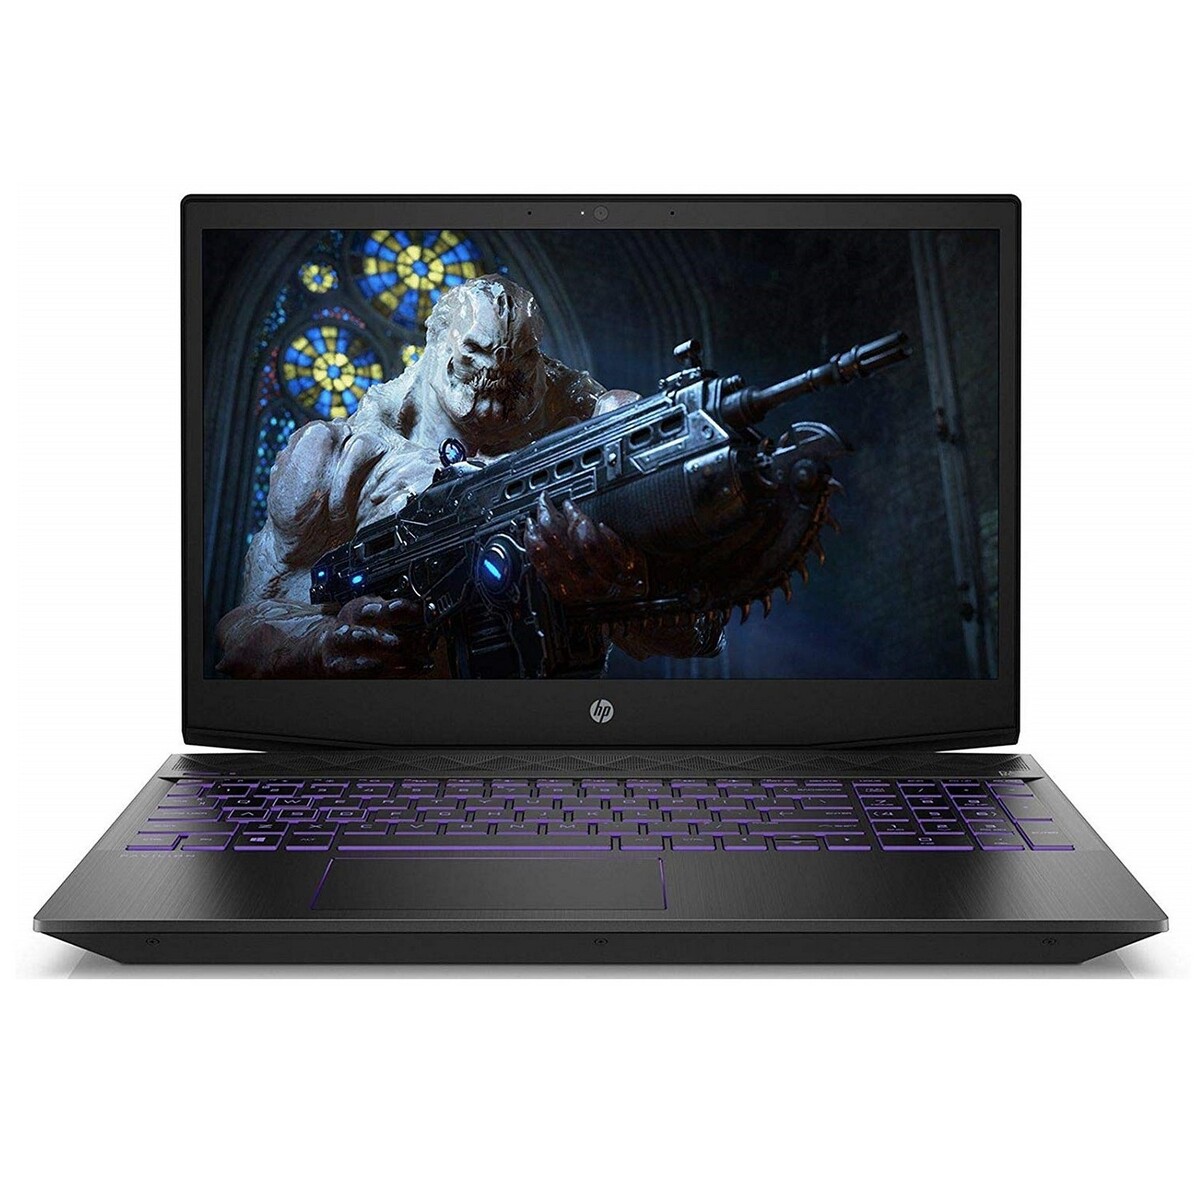 HP Gaming Notebook CX0144TX Core i7 8th Gen 15.6" Win10 Shadow Black